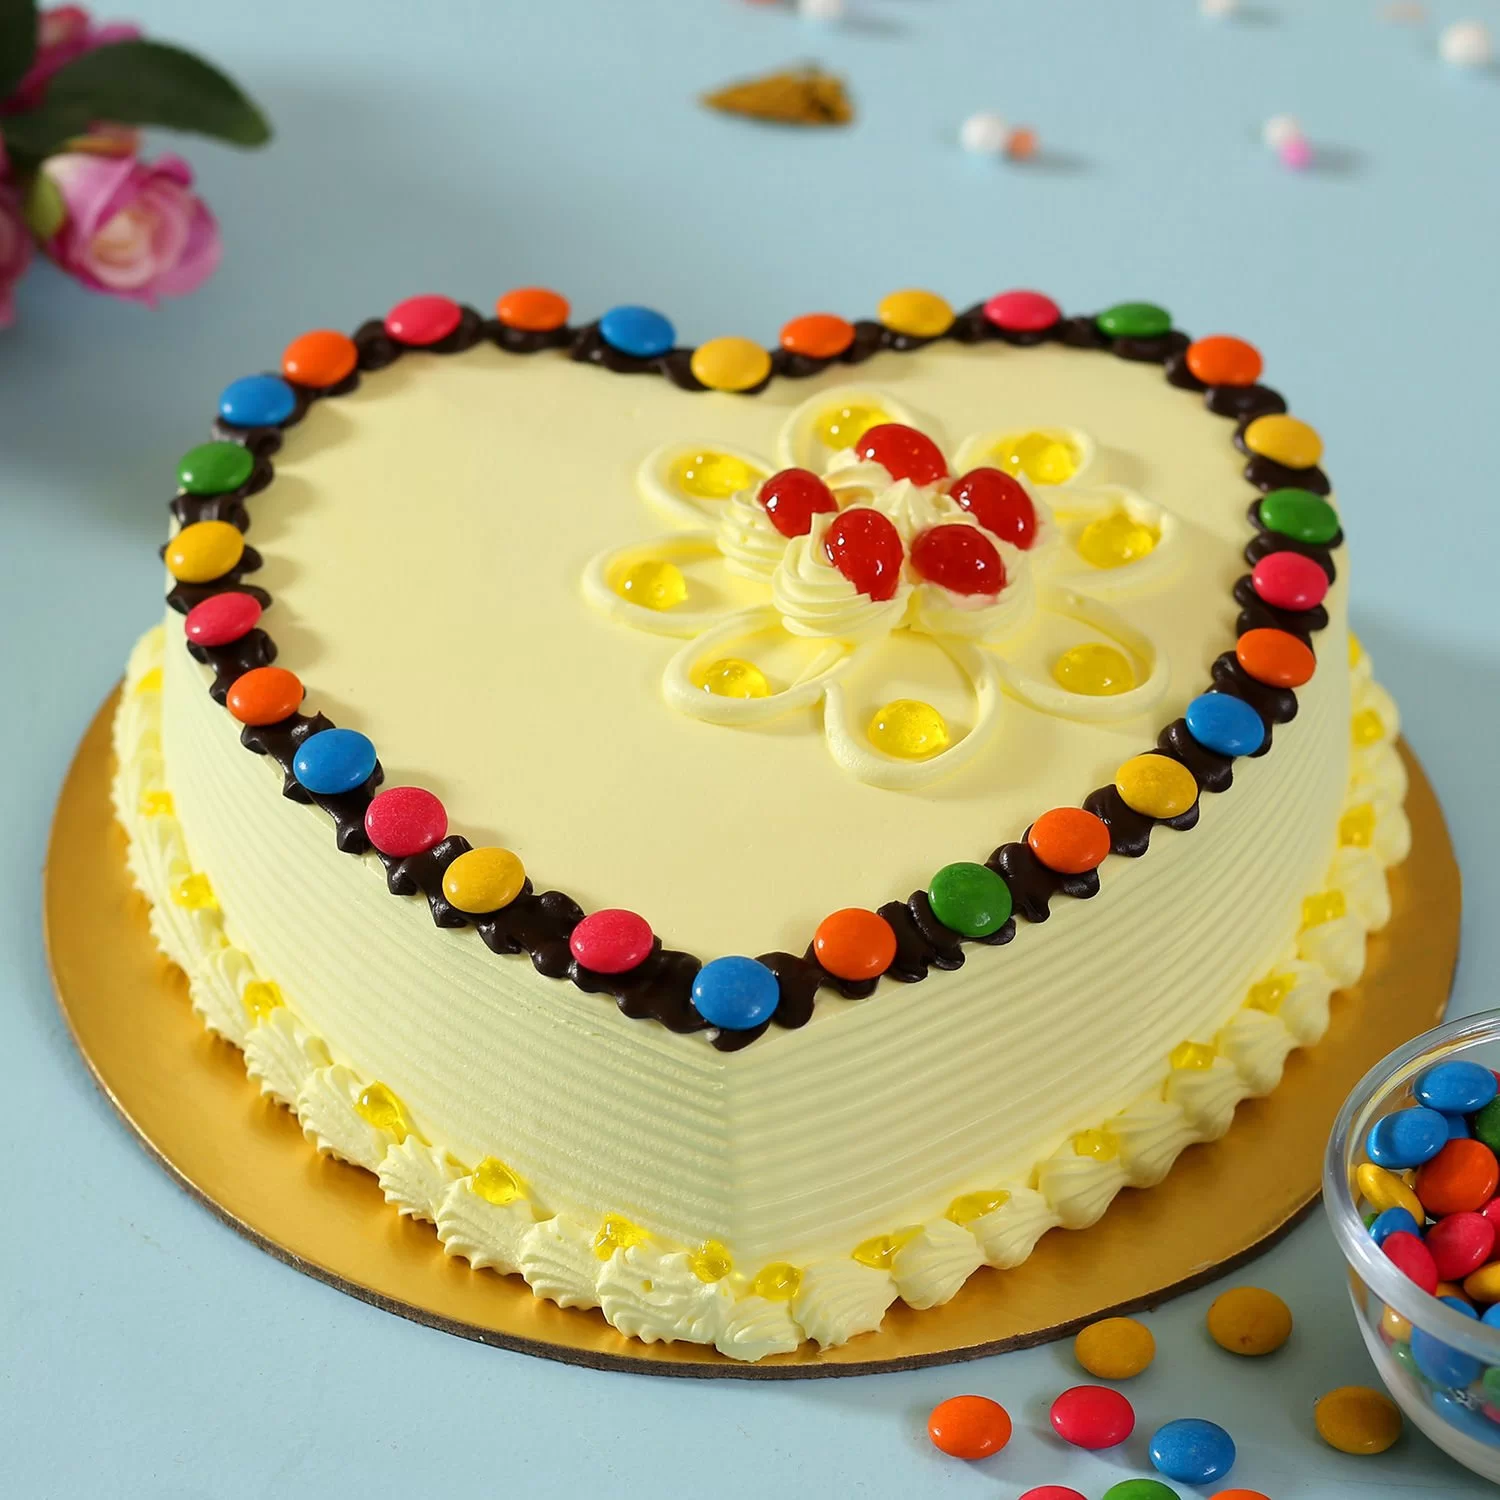 Butterscotch flavor tall cake for... - Creamy_creation90 | Facebook